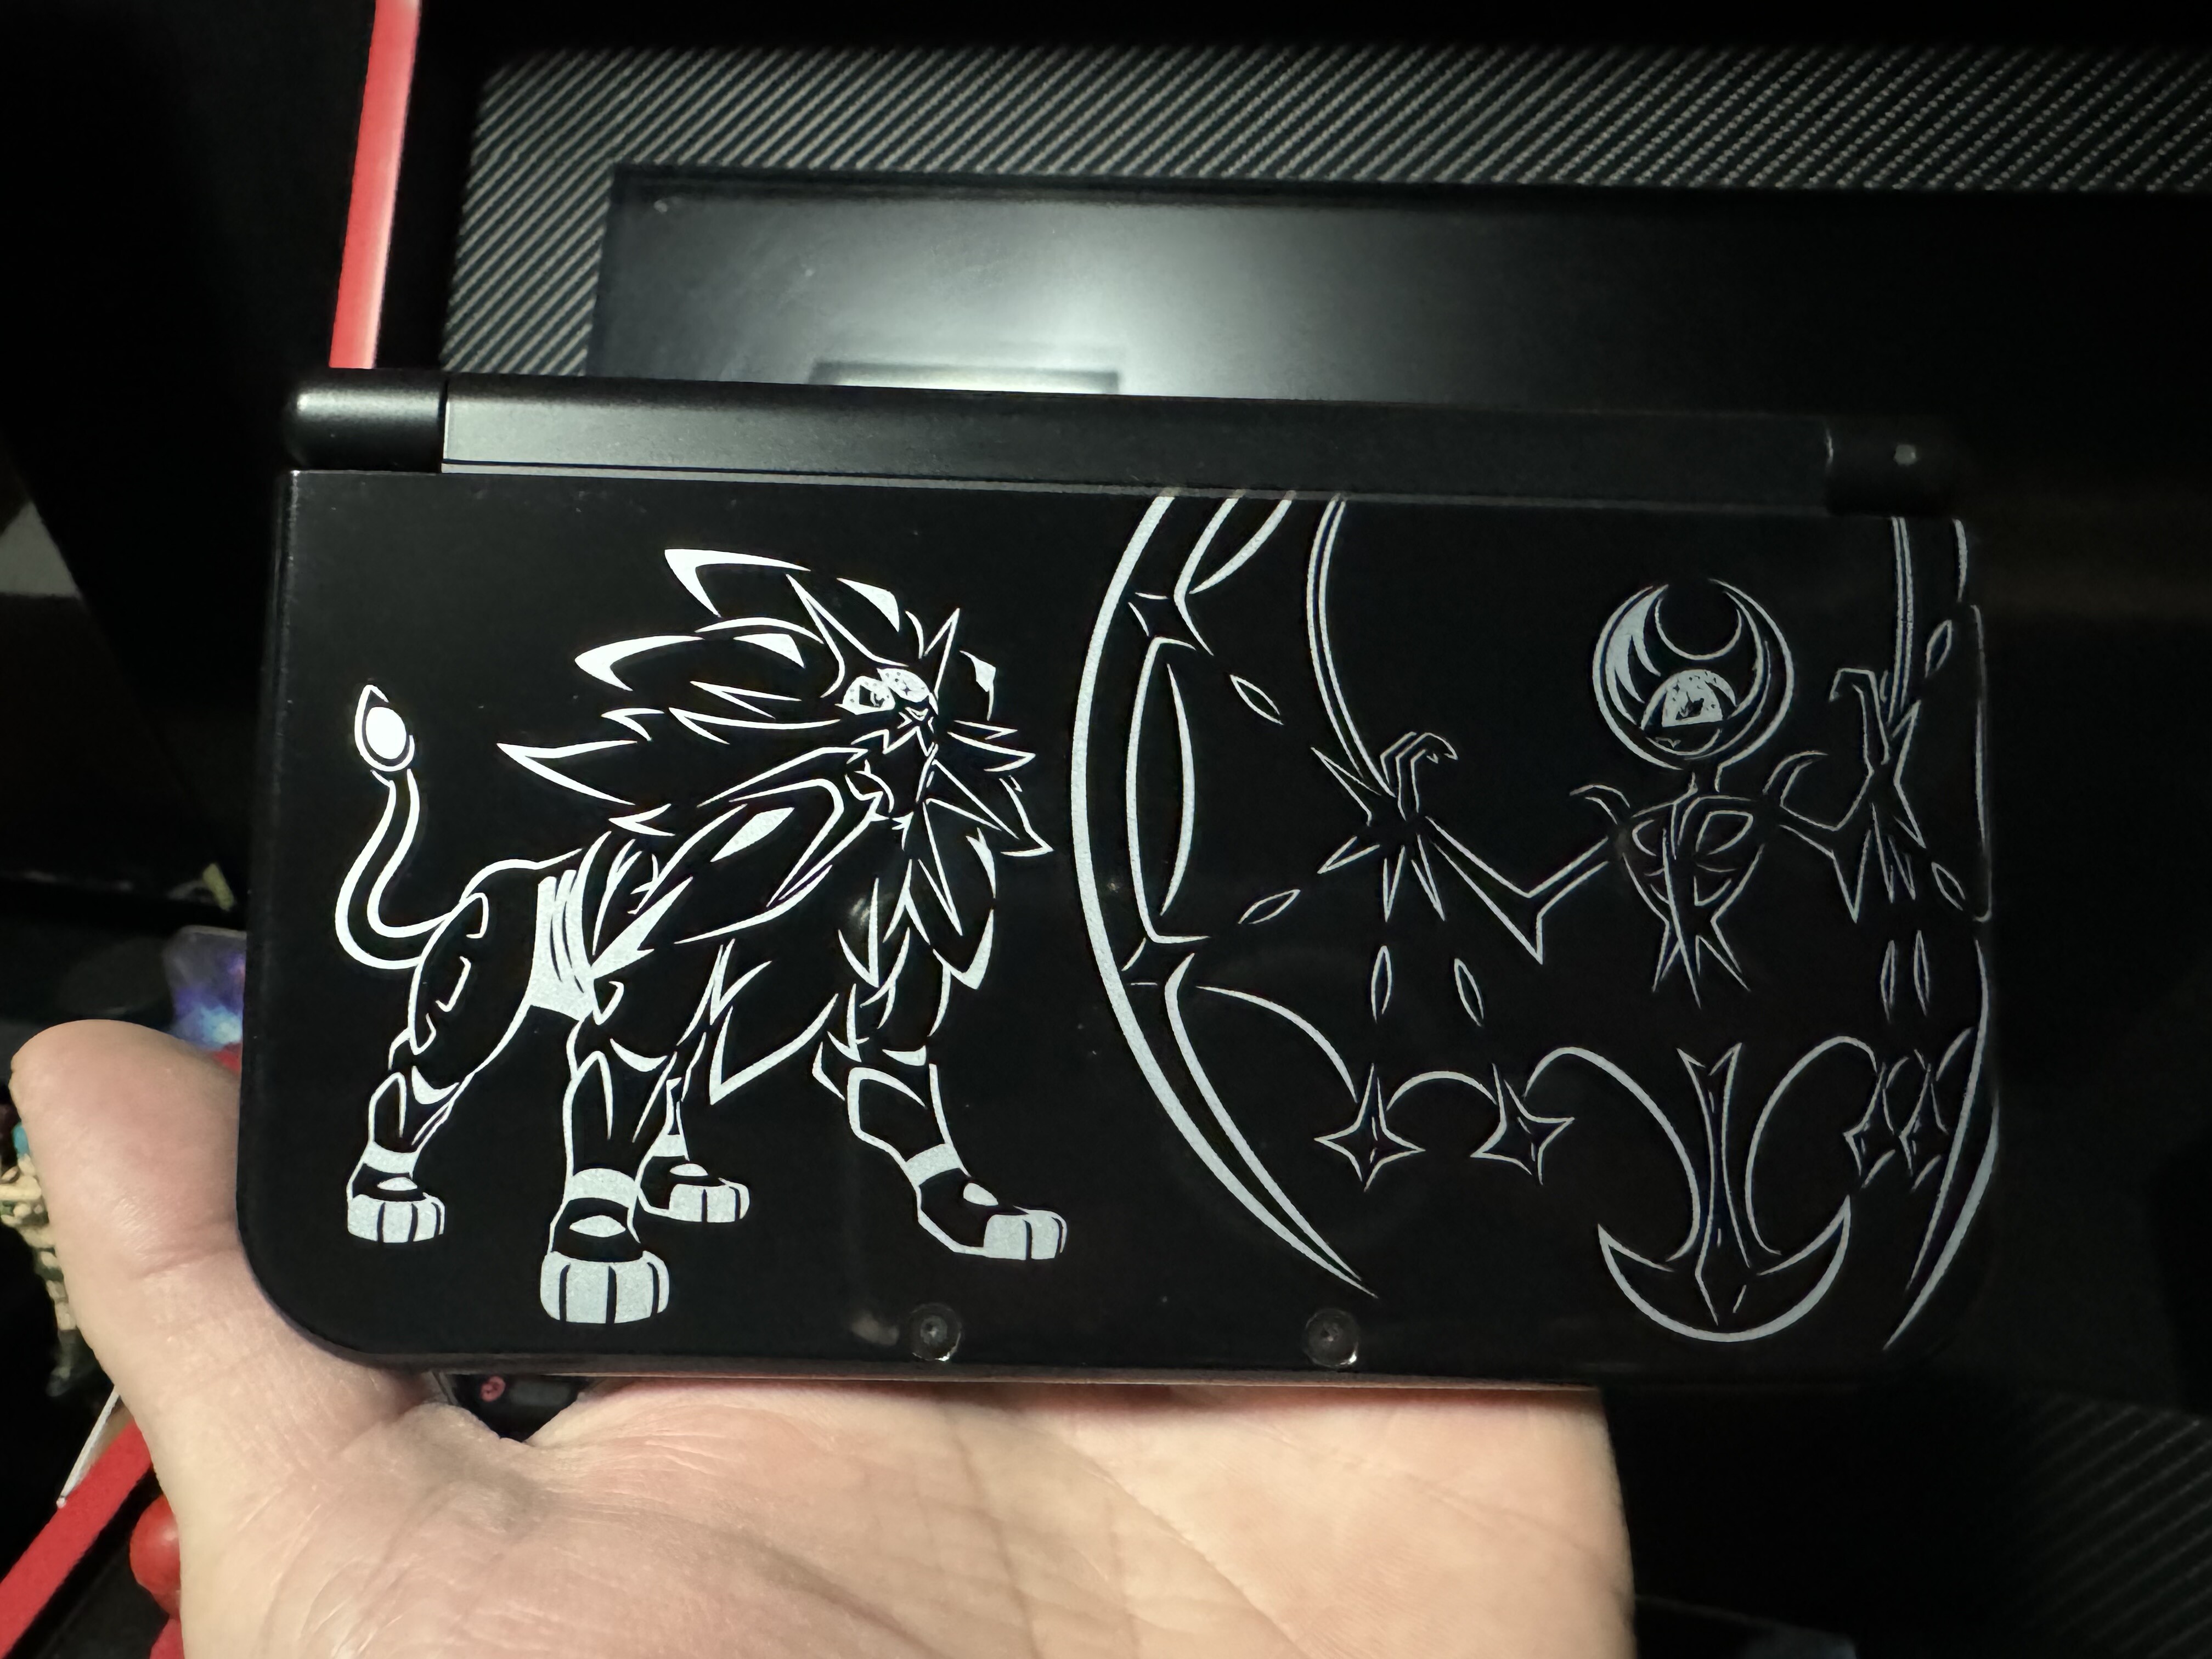 New Nintendo 3DS Xl Pokémon Sun and Moon Console [KOR]